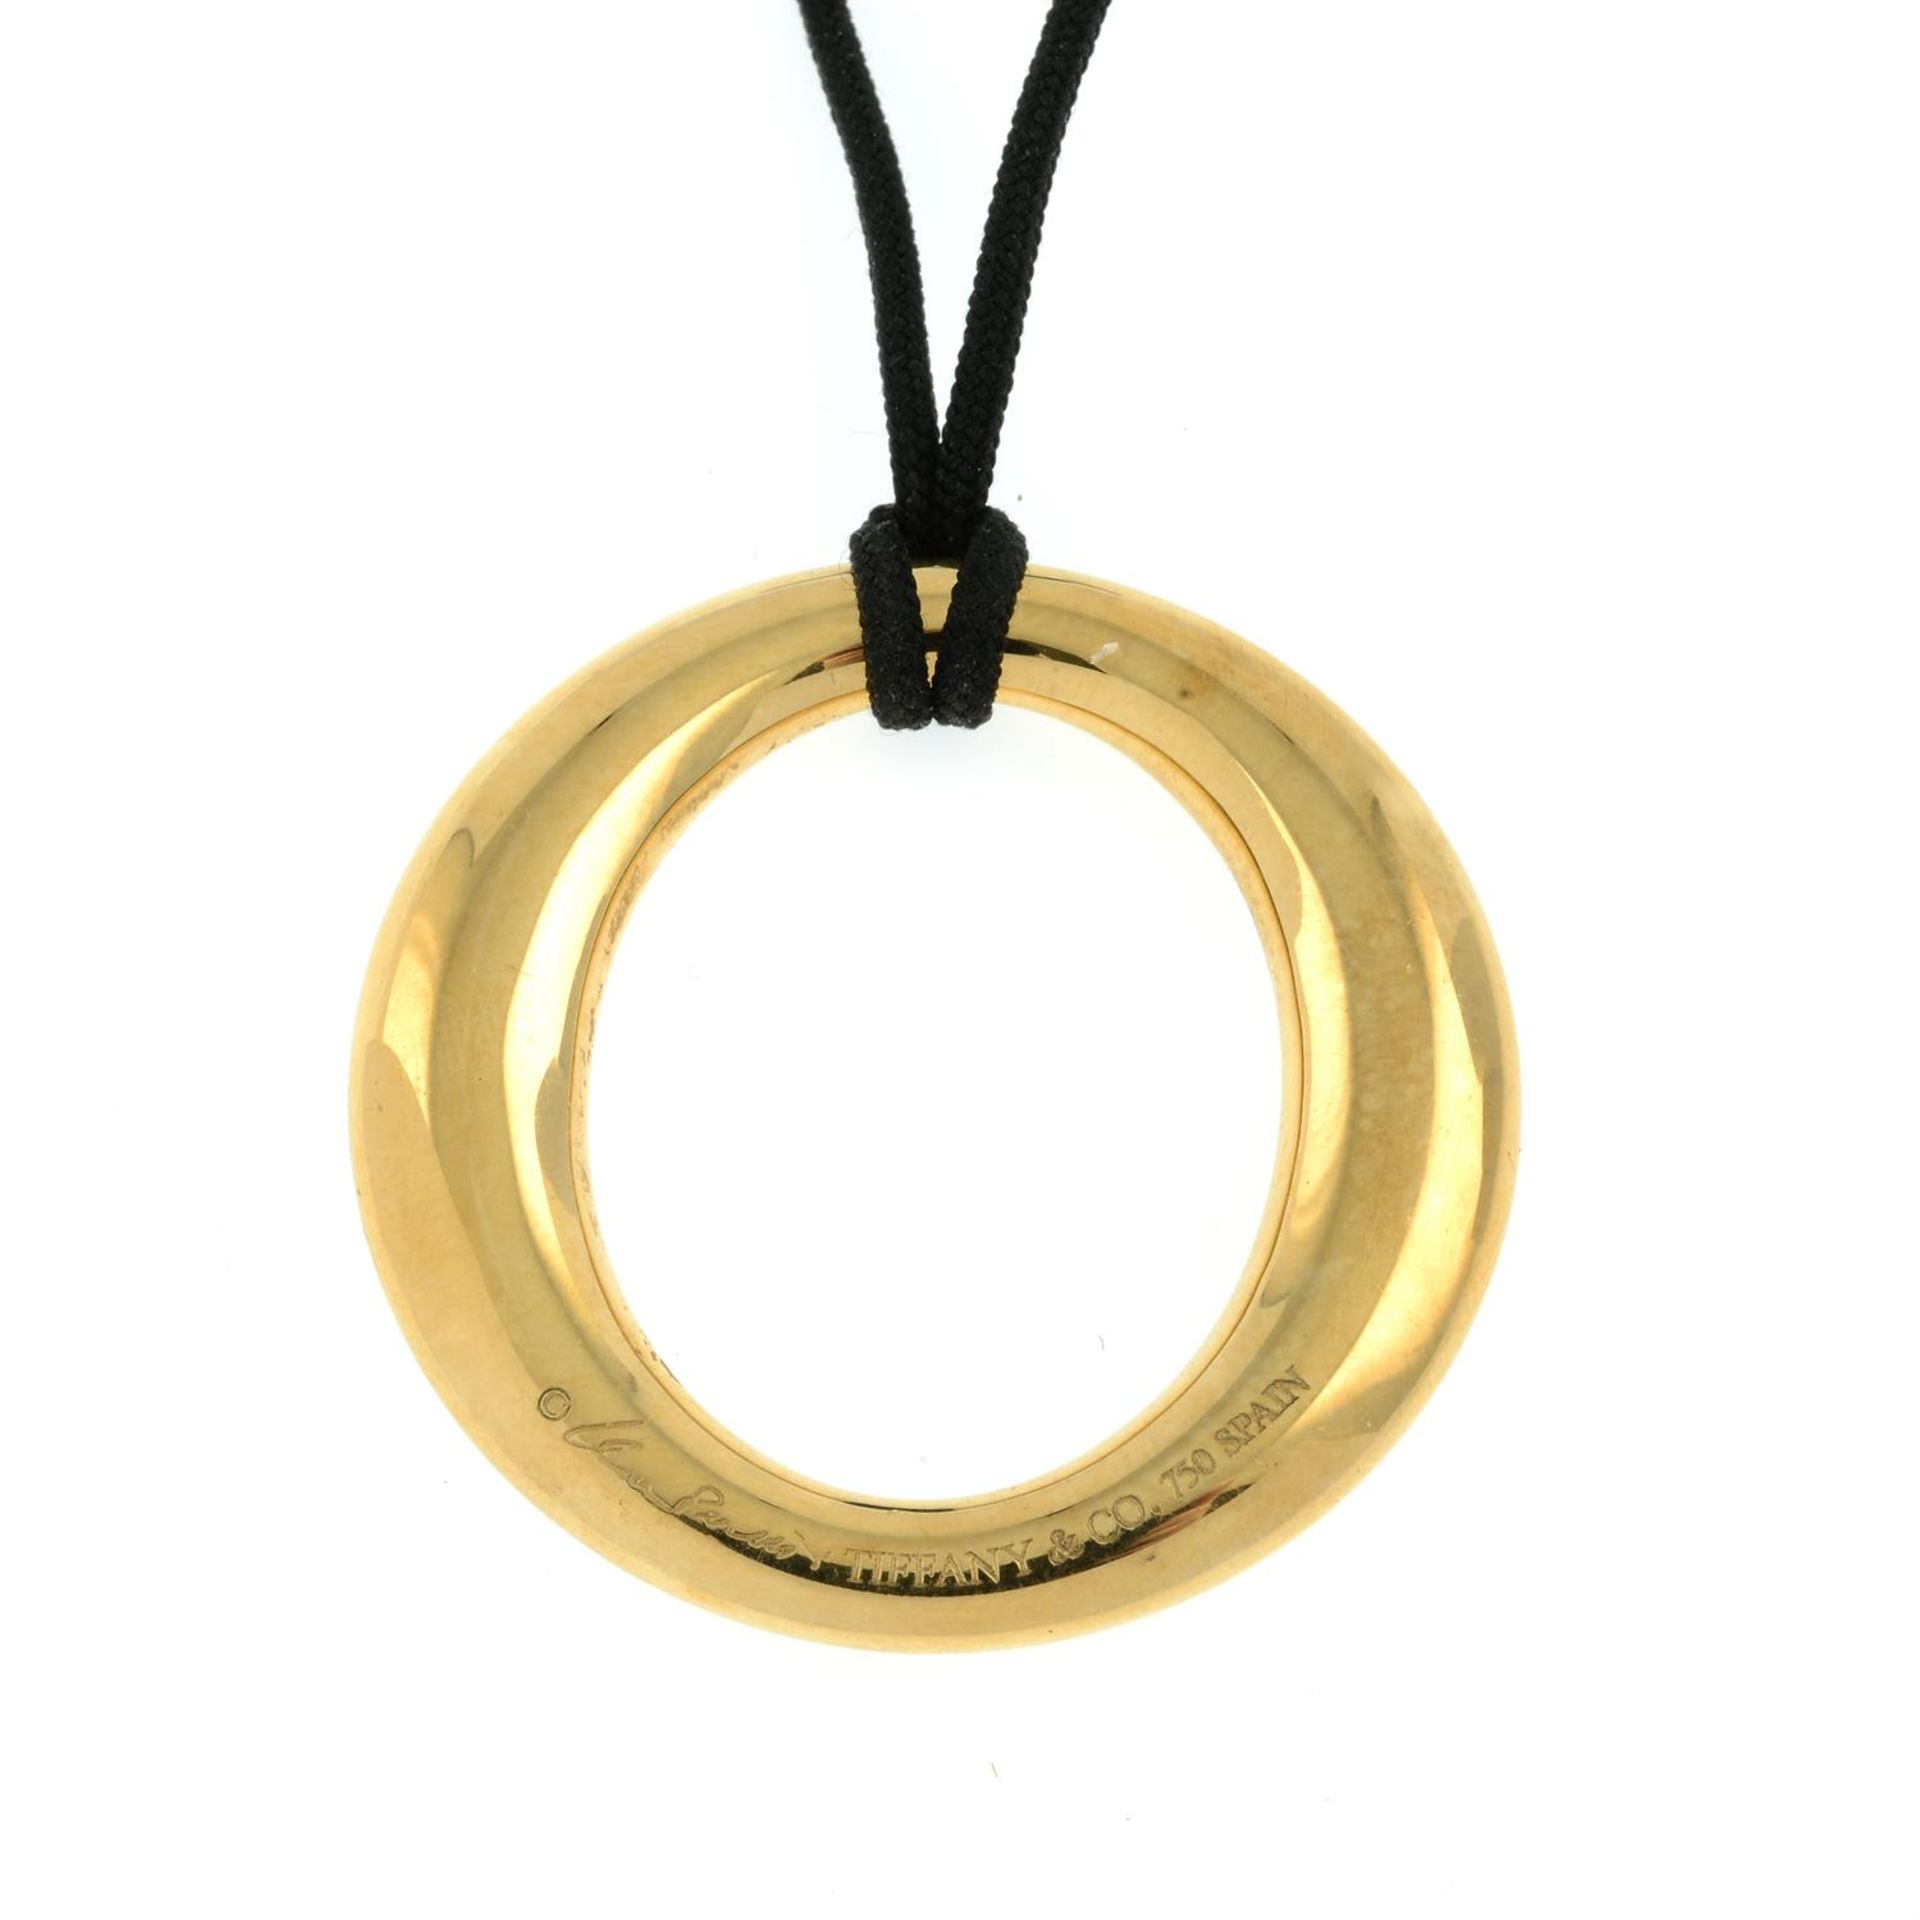 A 'Sevillana' pendant, on black cord, by Elsa Peretti for Tiffany & Co. - Image 3 of 6